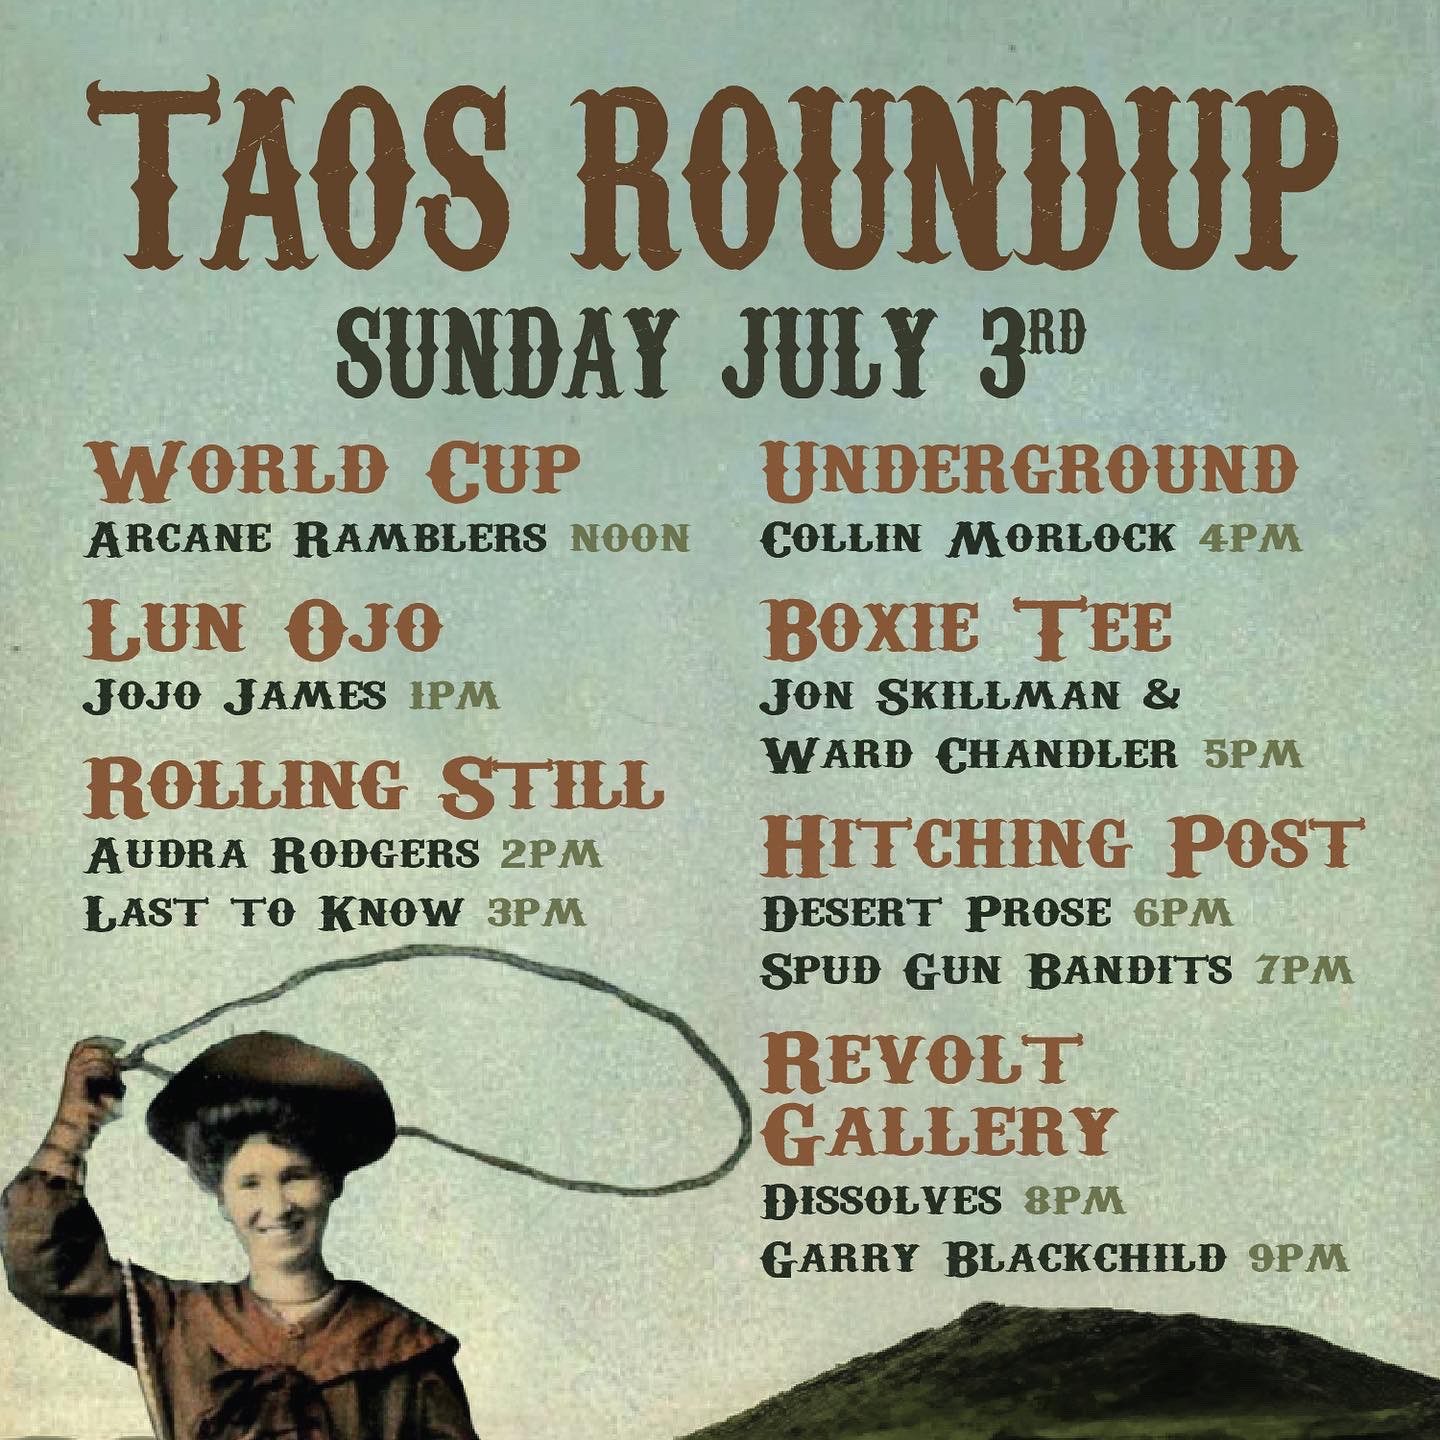 Taos Roundup